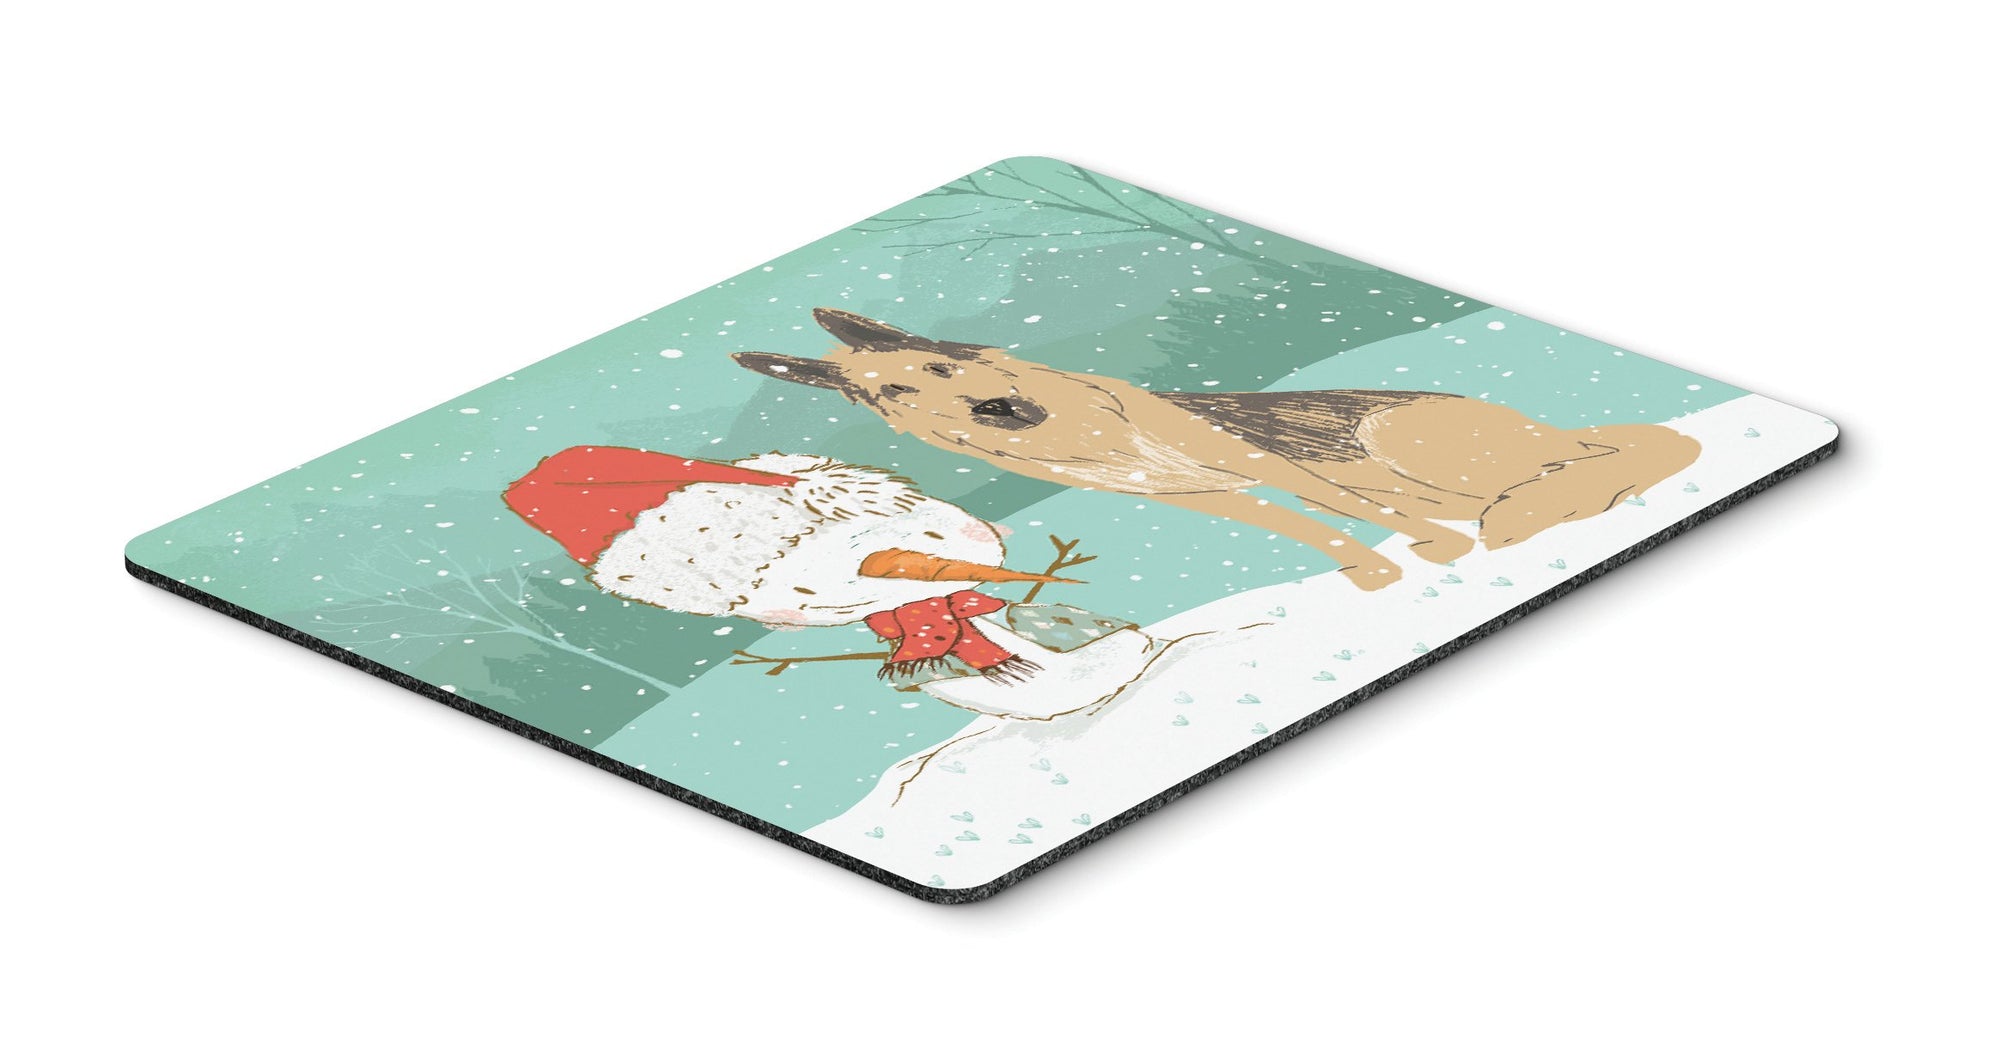 German Shepherd and Snowman Christmas Mouse Pad, Hot Pad or Trivet CK2033MP by Caroline's Treasures